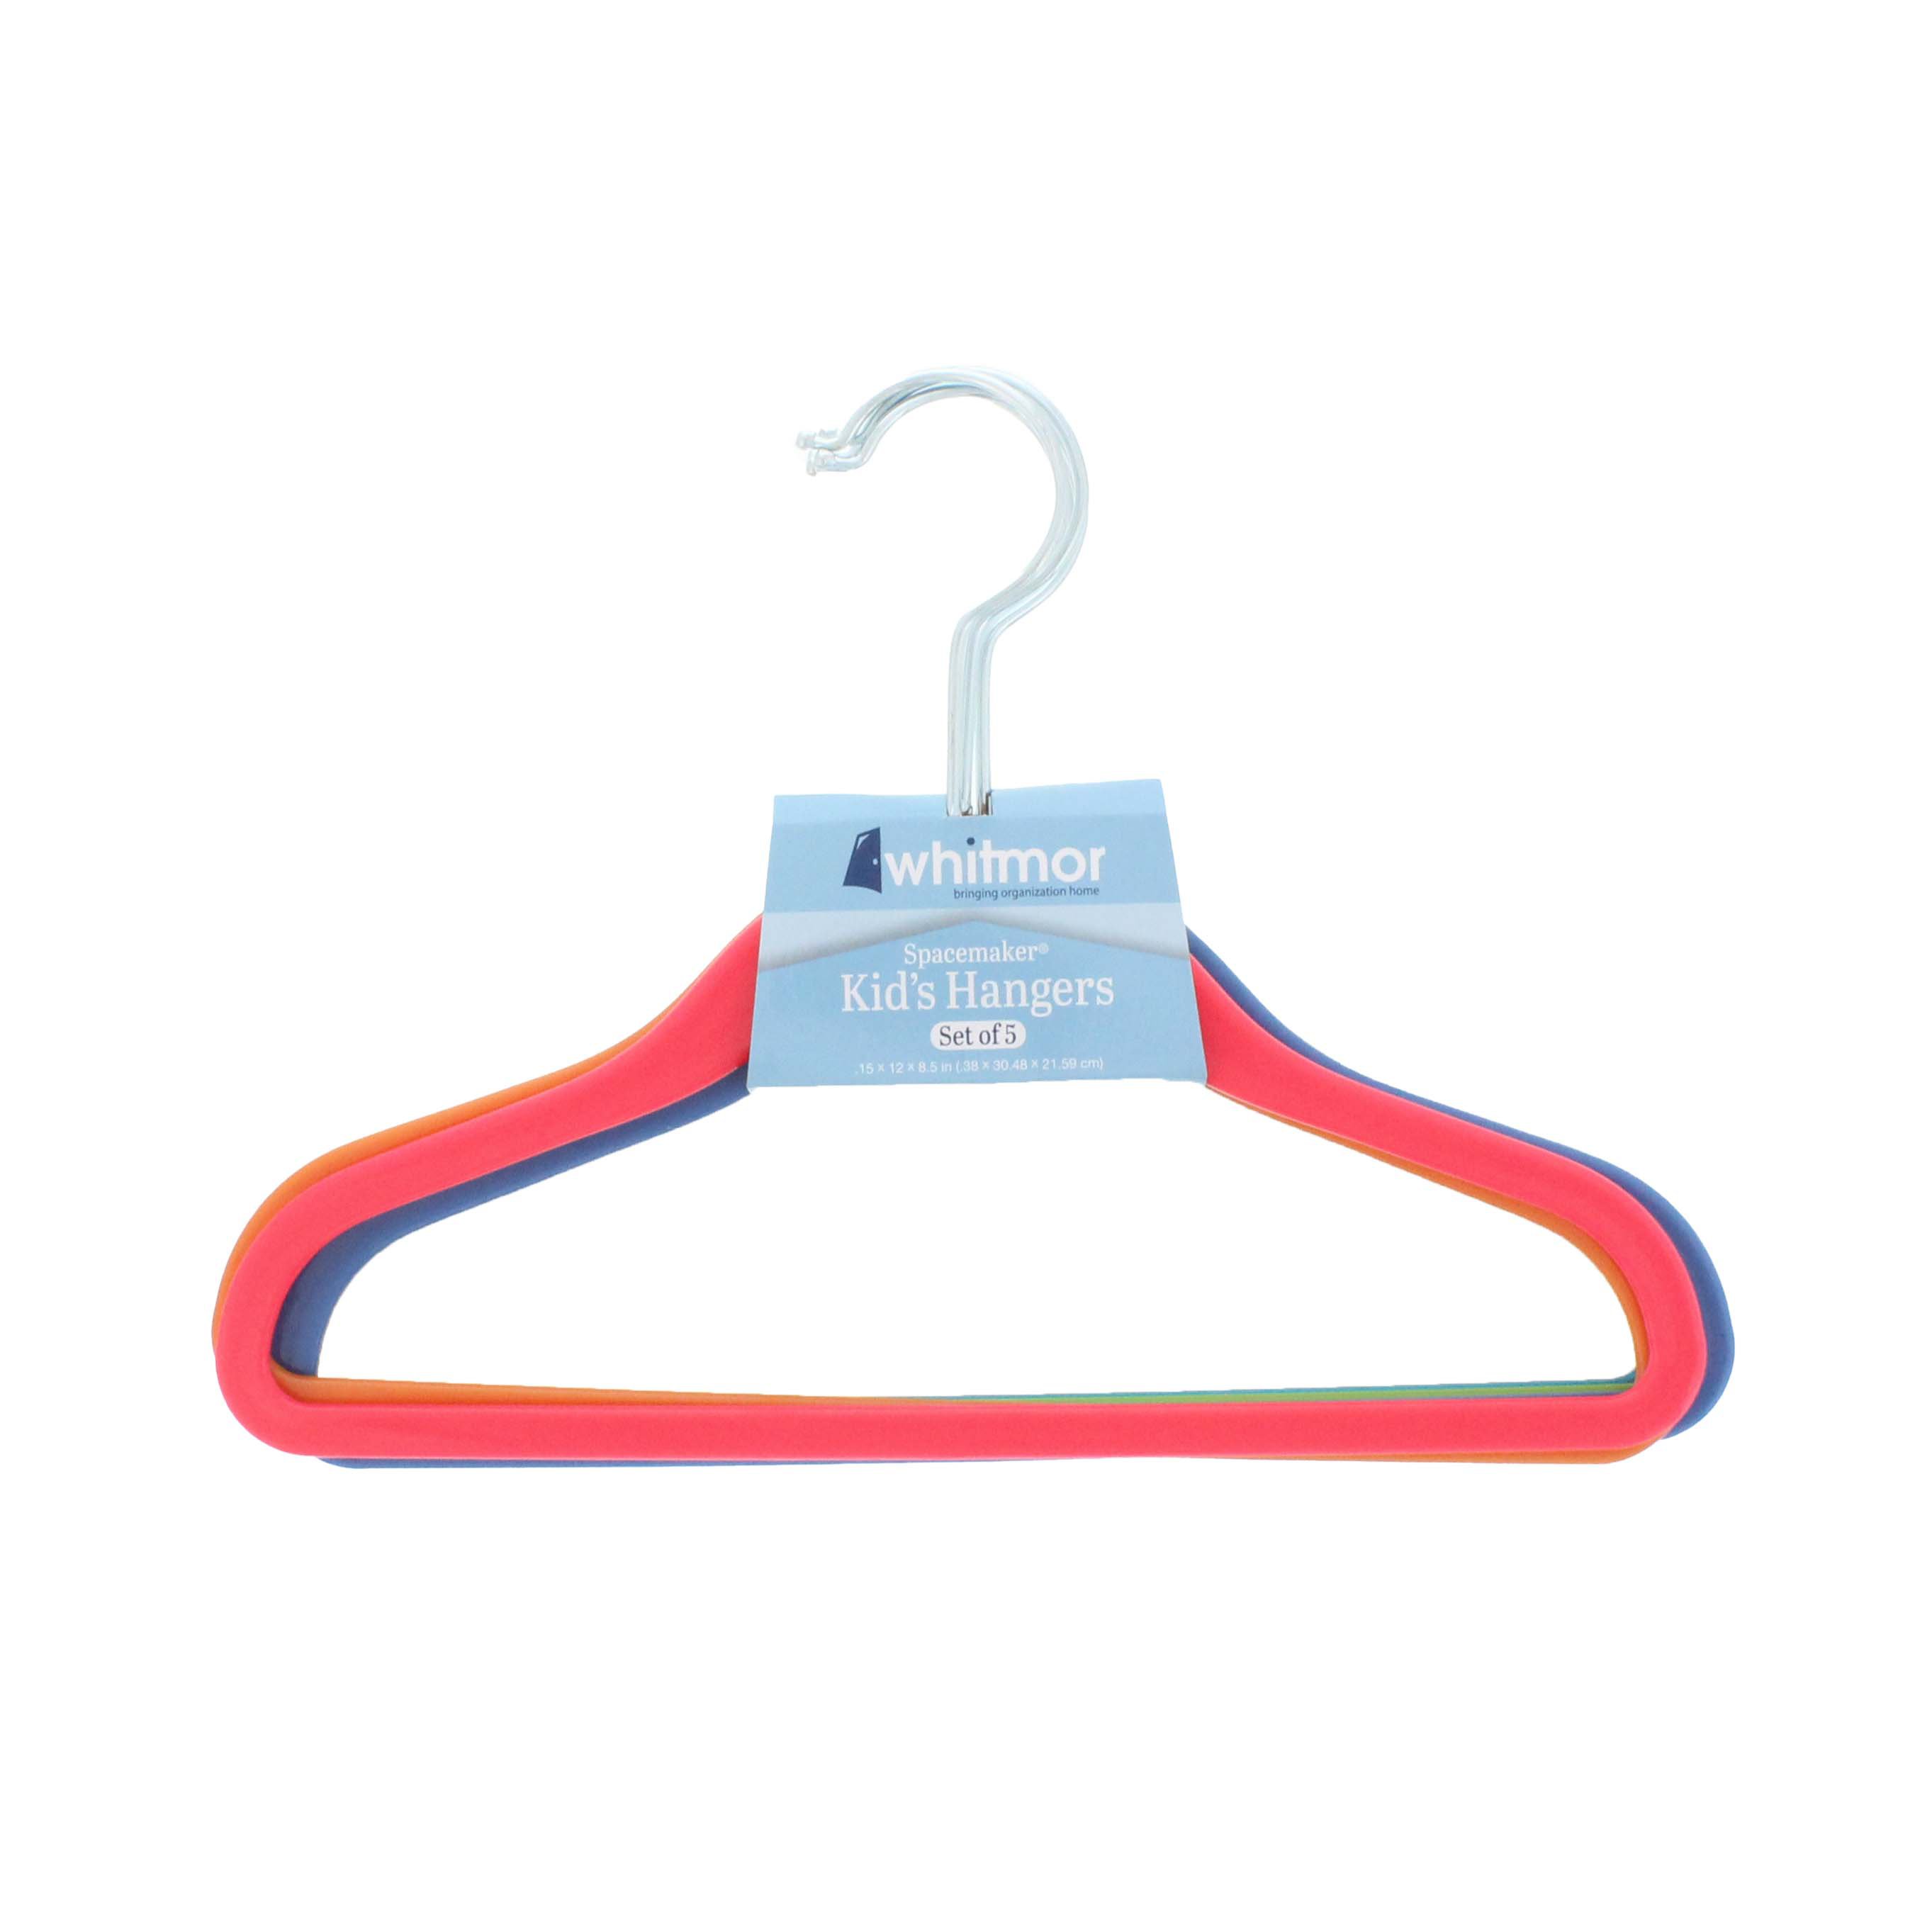 Merrick Children's Plastic Hangers - Shop Hangers at H-E-B